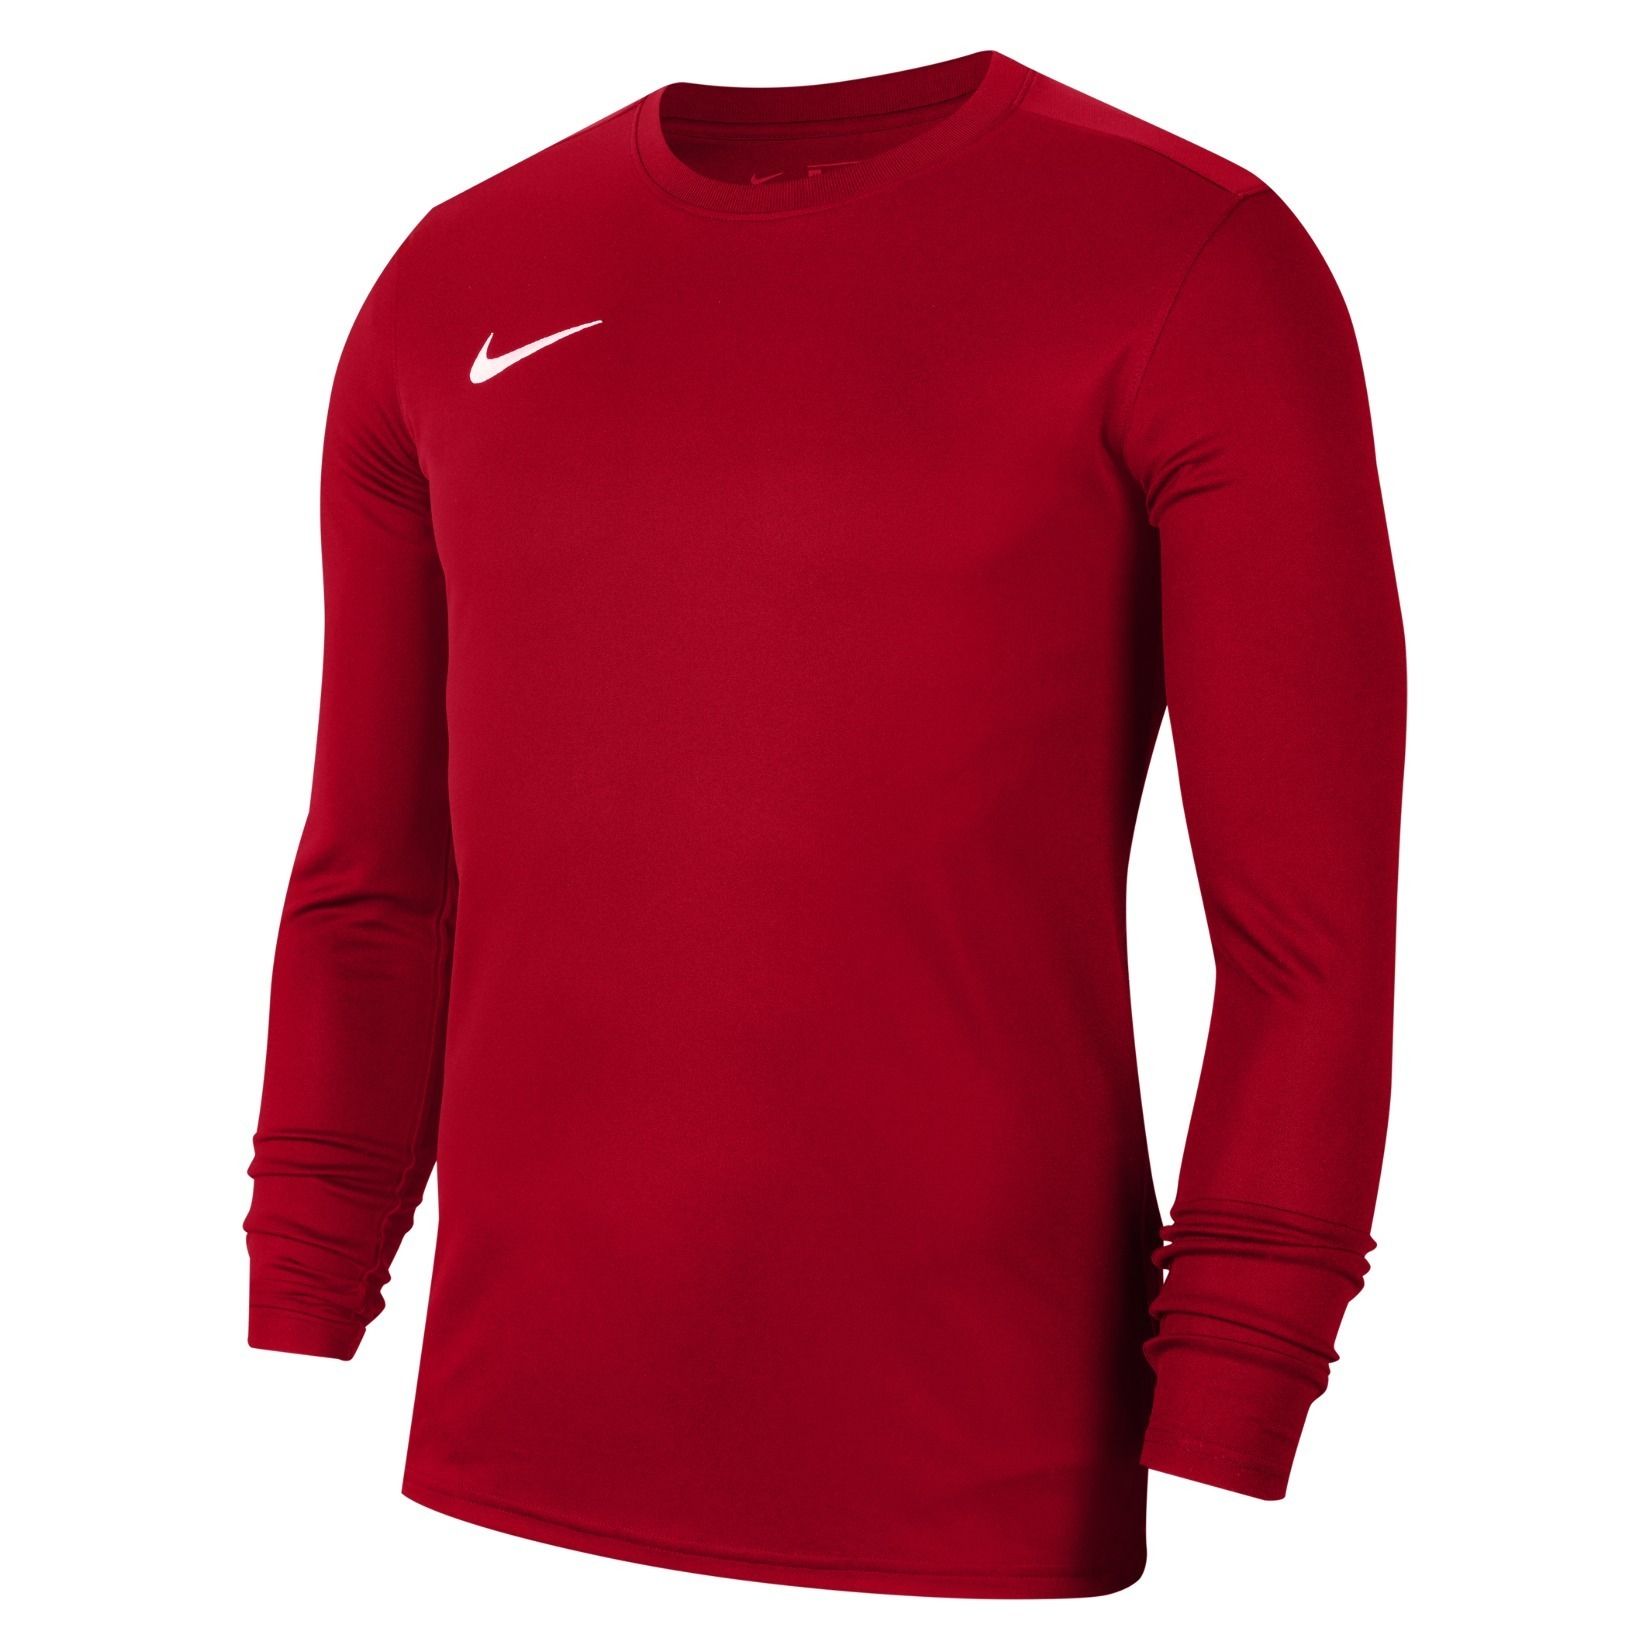 red long sleeve dri fit shirt